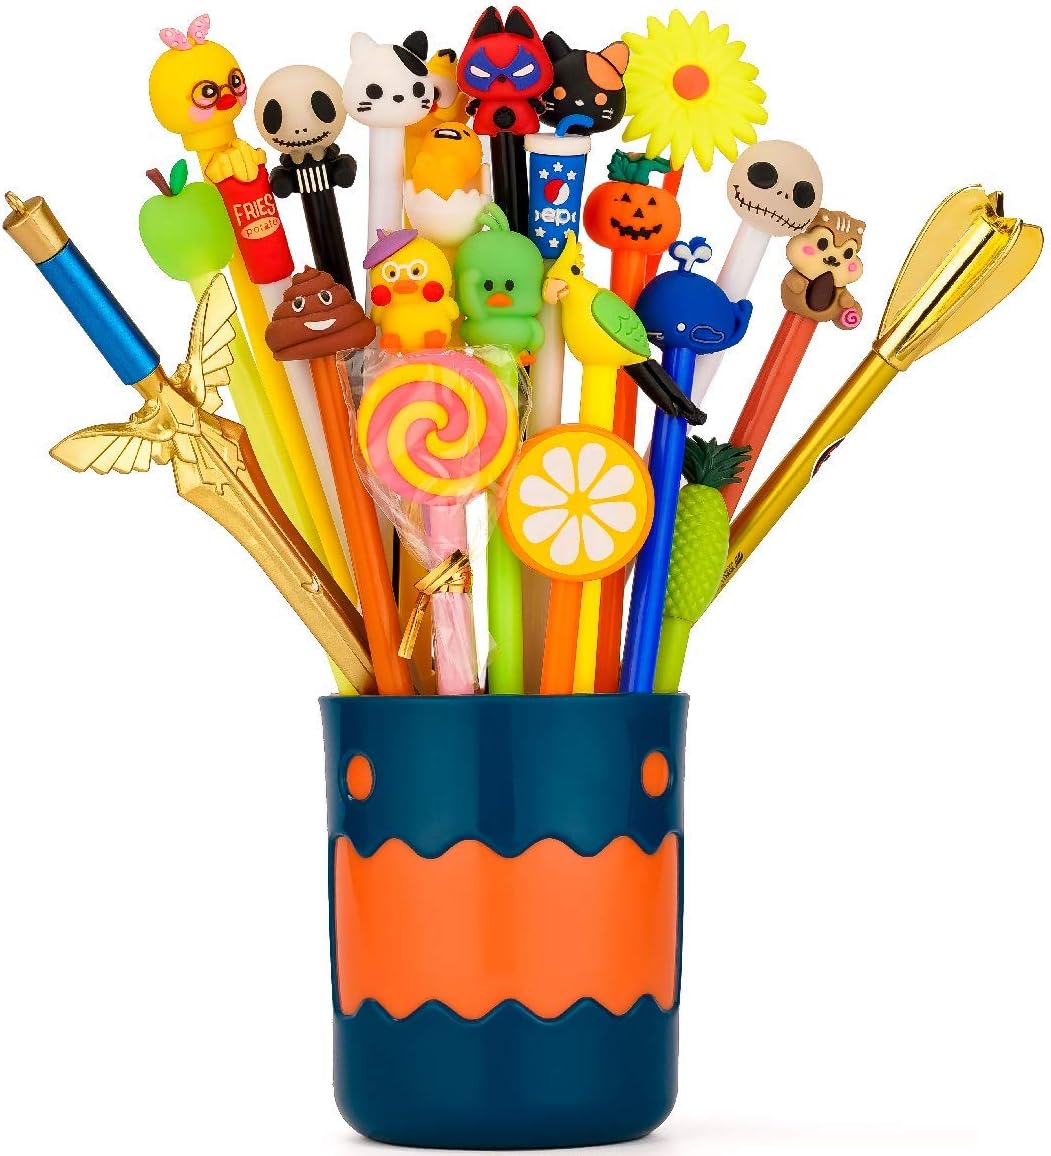 With pen holder cartoon gel pens set,so cute kawaii fun black ink pens,best gift for kids,office school supplies,24pcs writing pens set